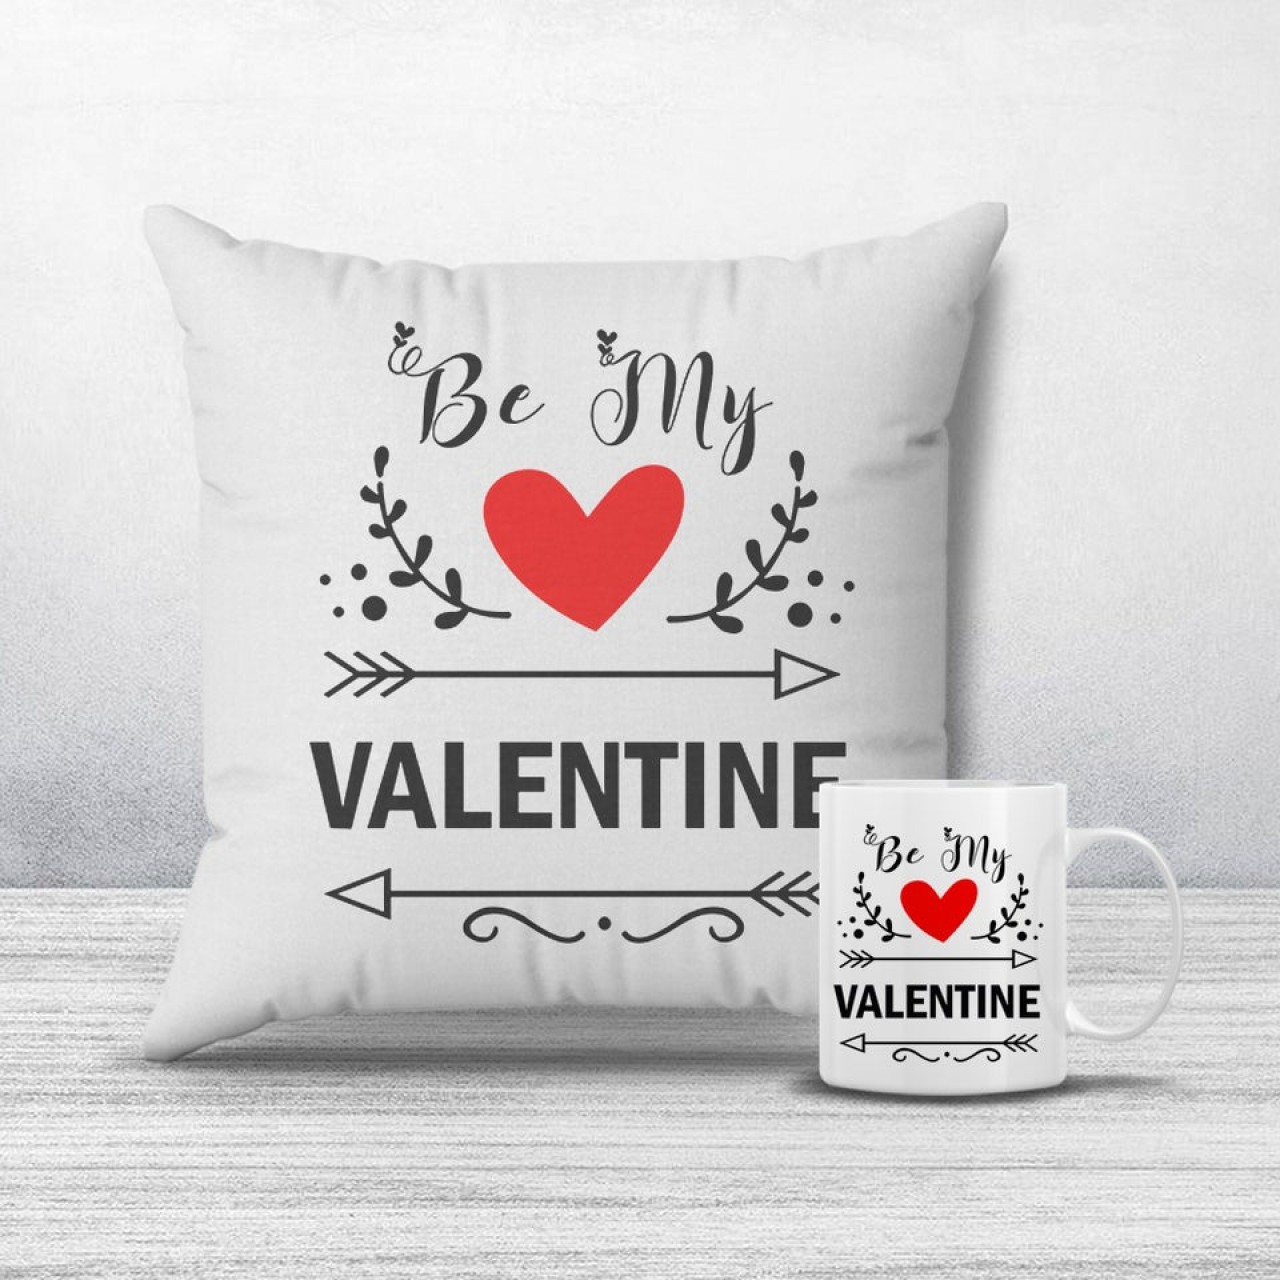 Be my valentine cushion & mug combo